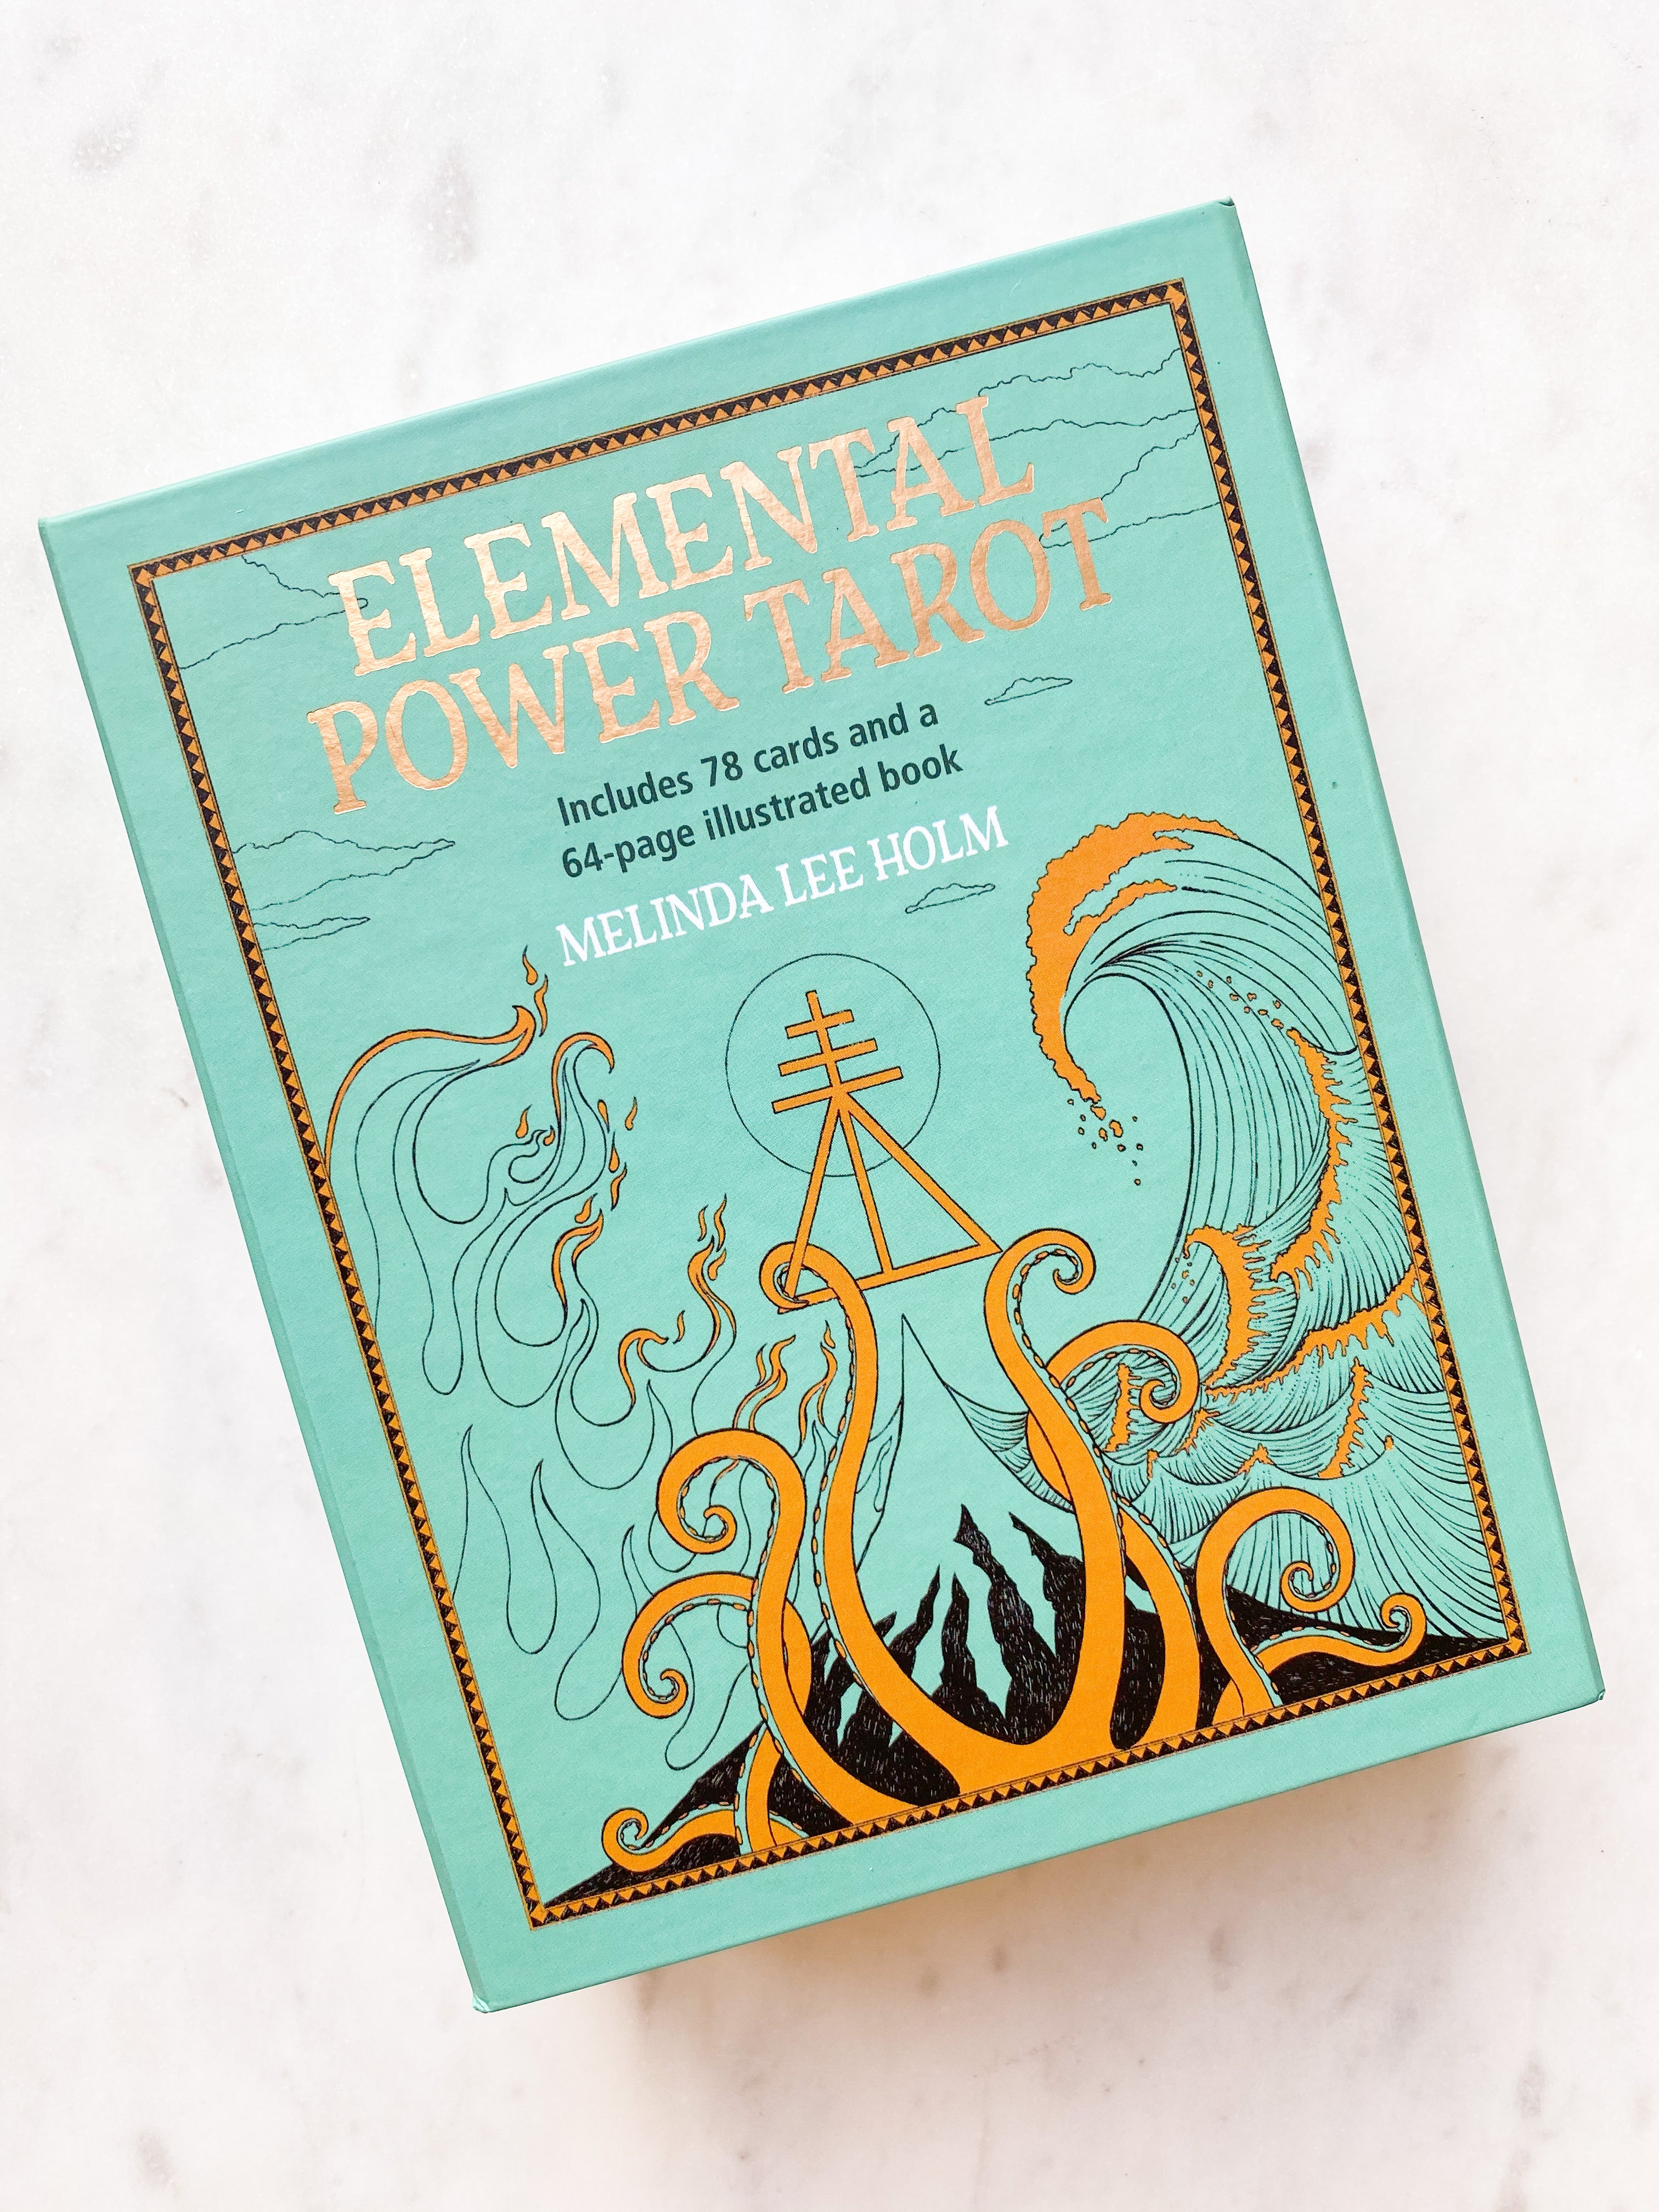 Elemental Power Tarot av Melinda Lee Holm